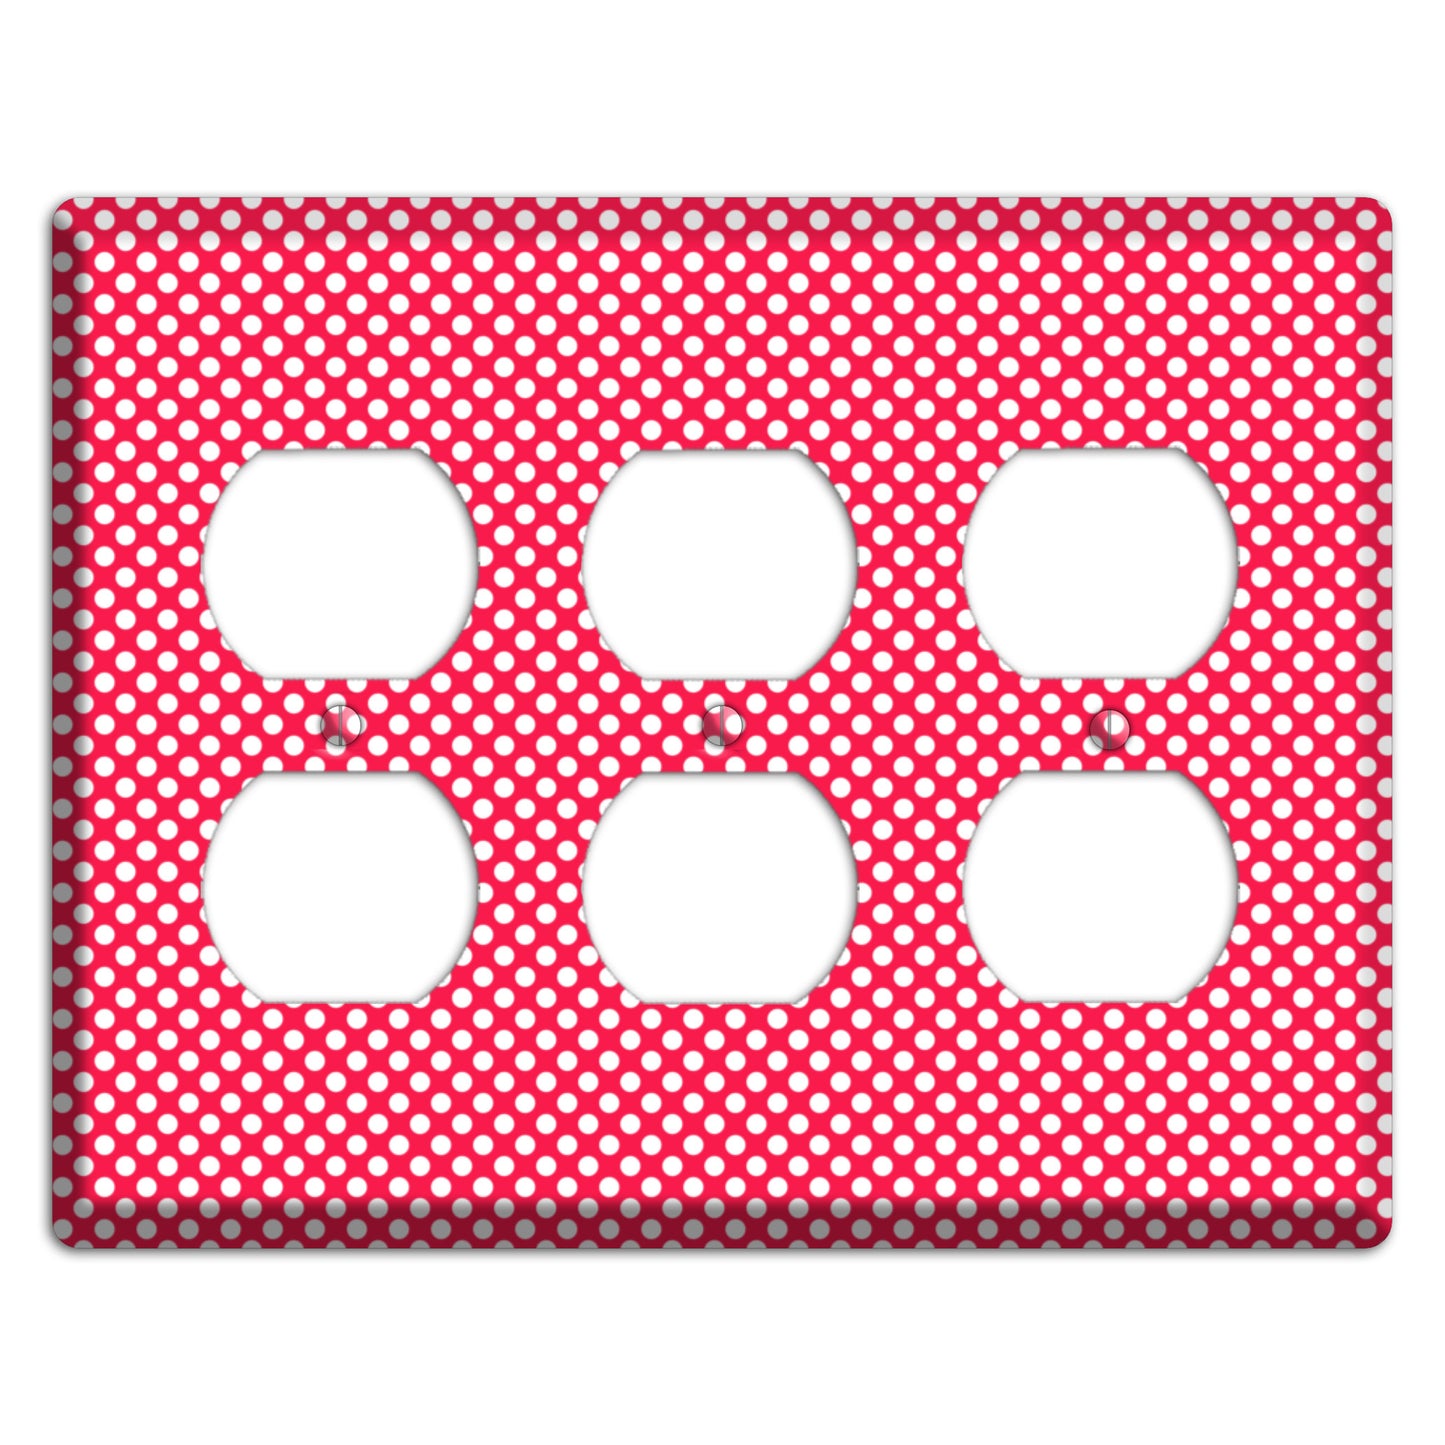 Fuschia with Pink Tiny Polka Dots 3 Duplex Wallplate